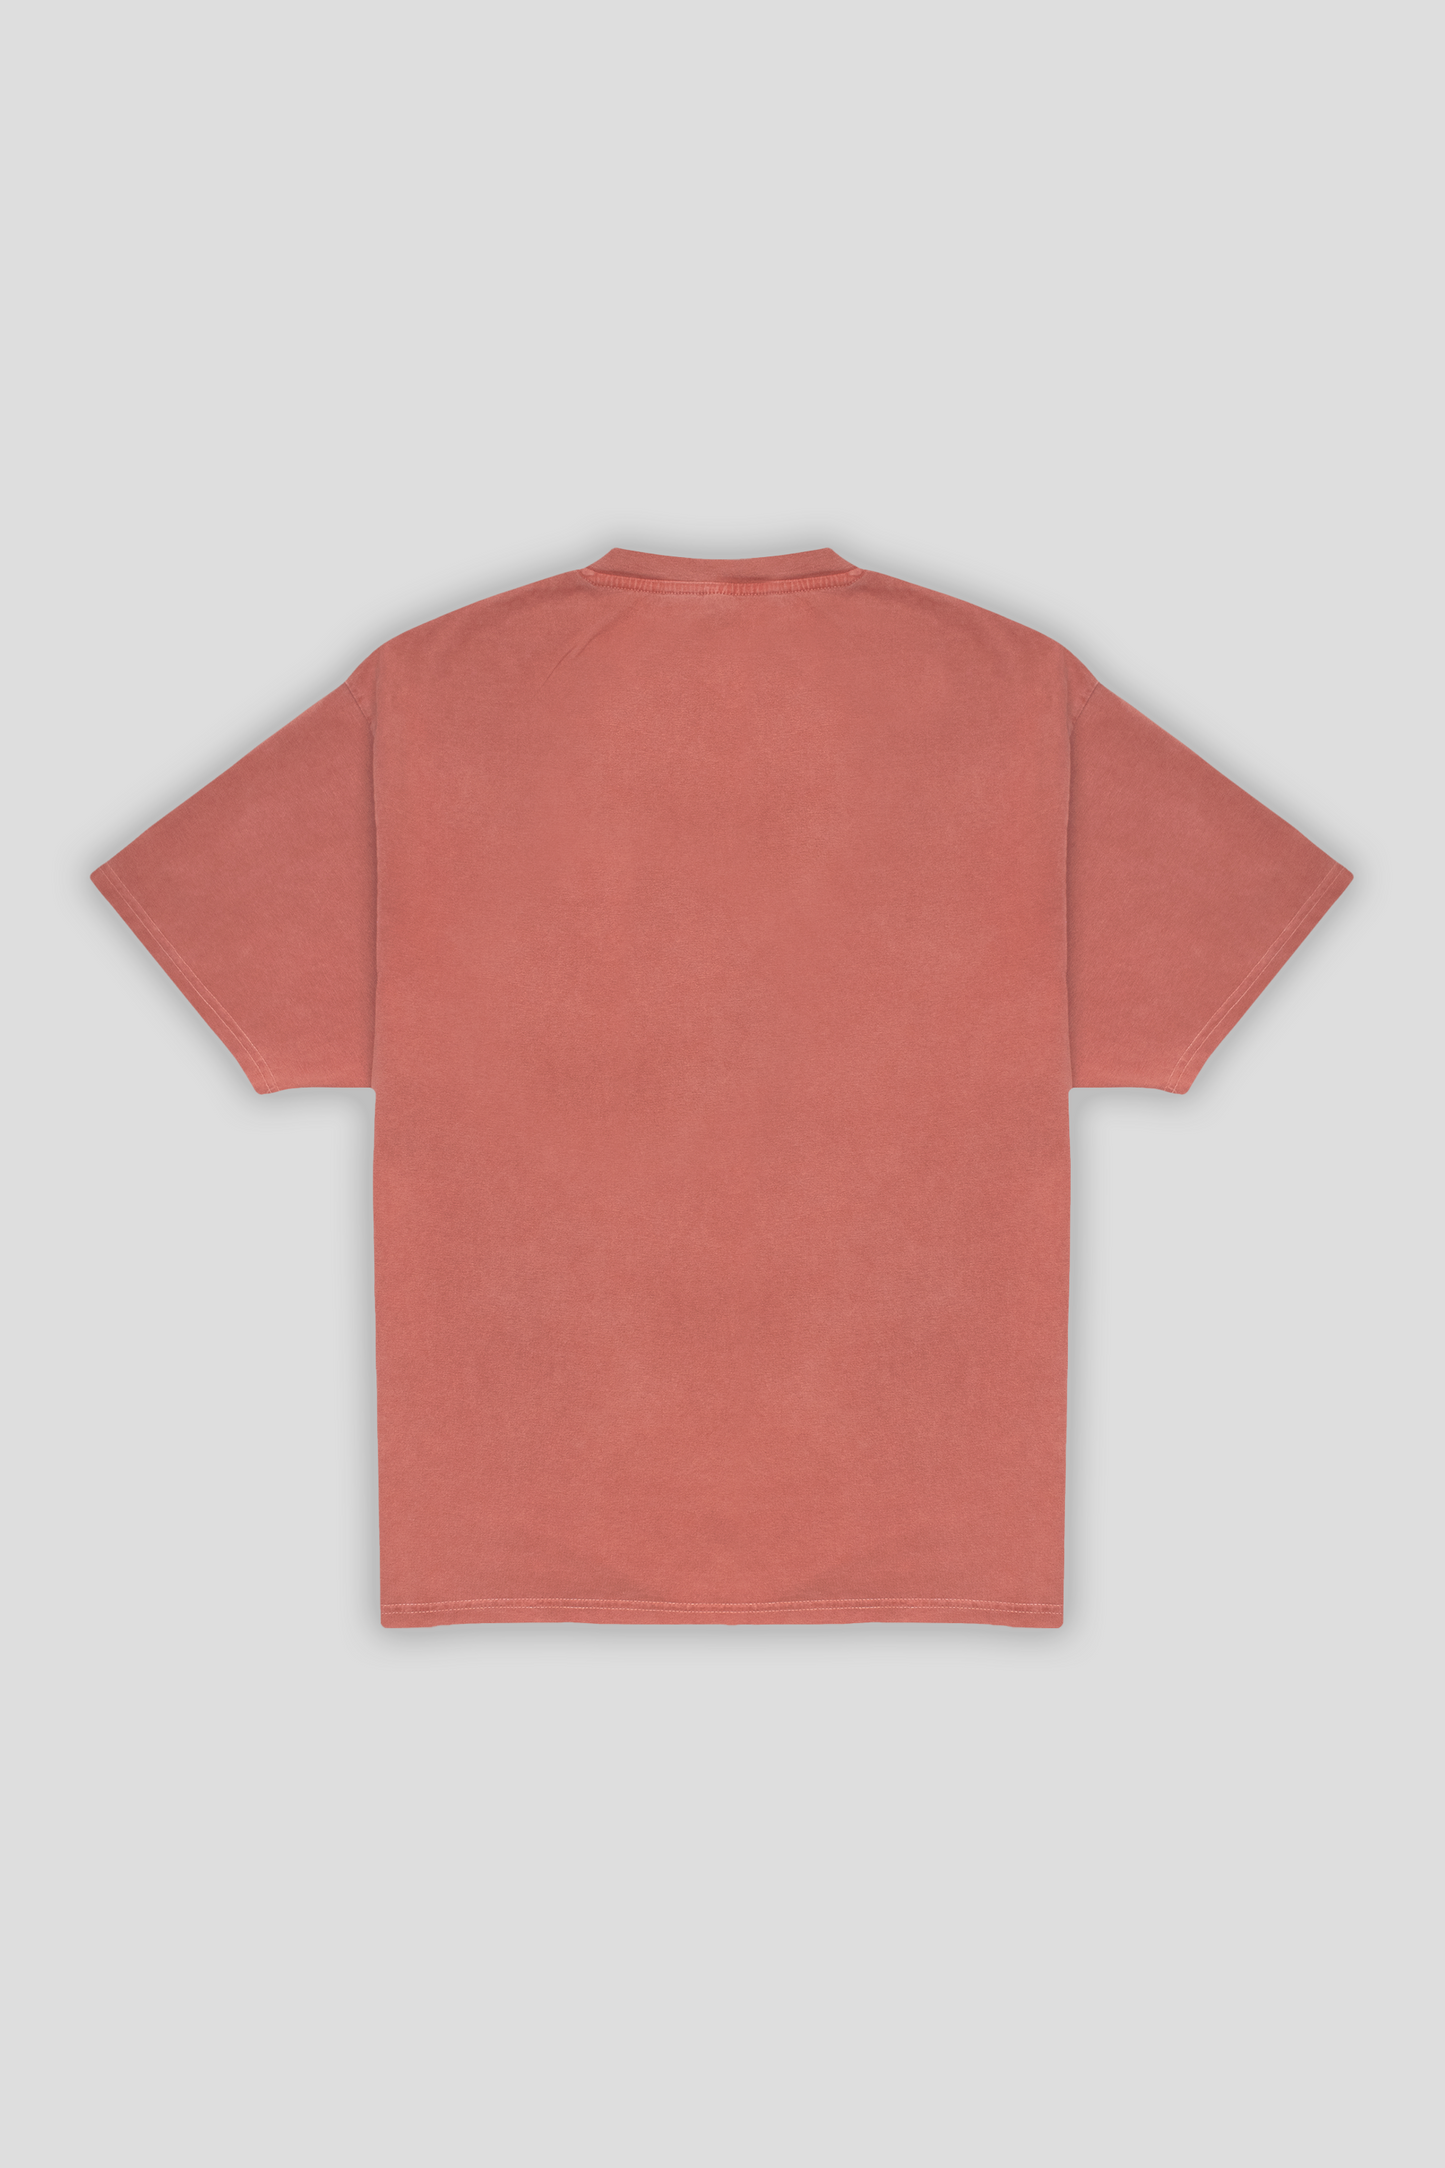 Atelier T-shirt Rust